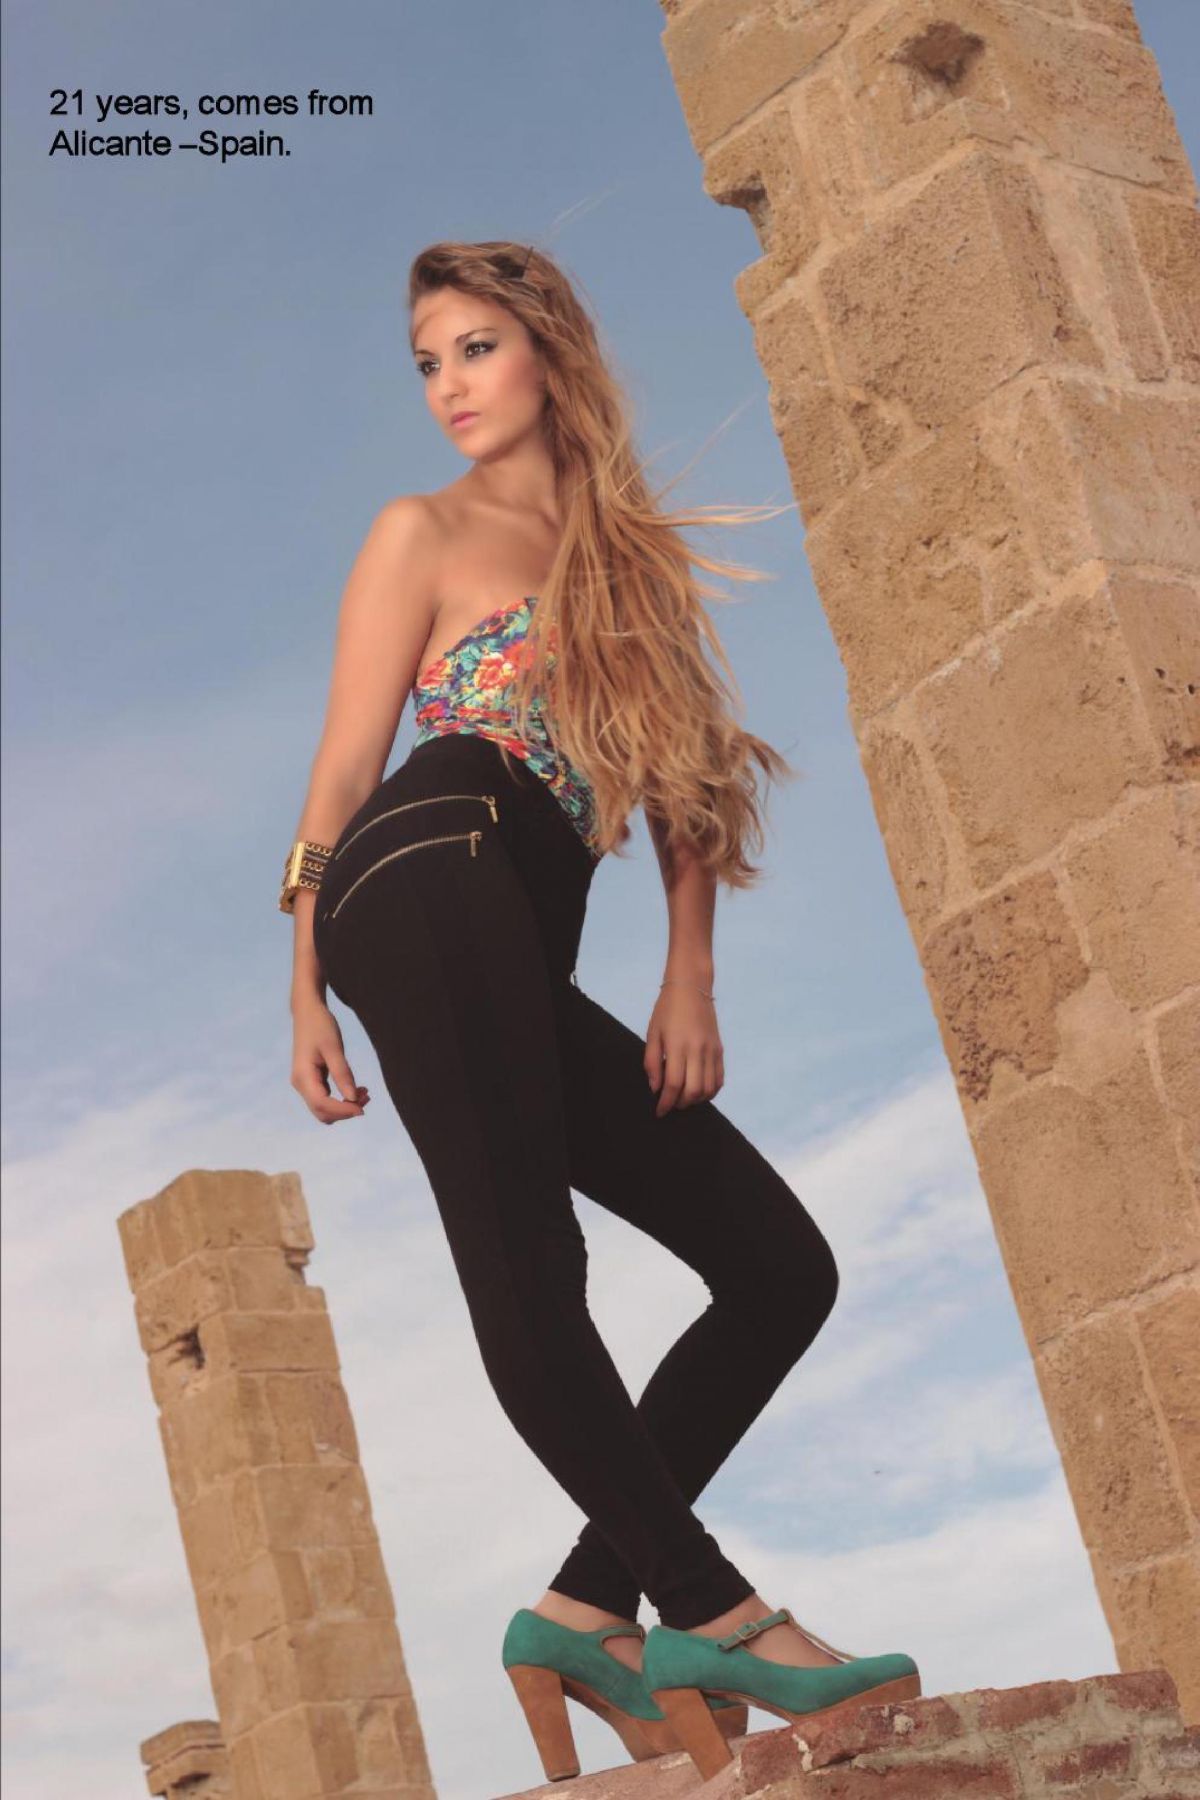 ELVIRA FERNANDEZ in Latin American Model Magazine, March/April 2014 Issue